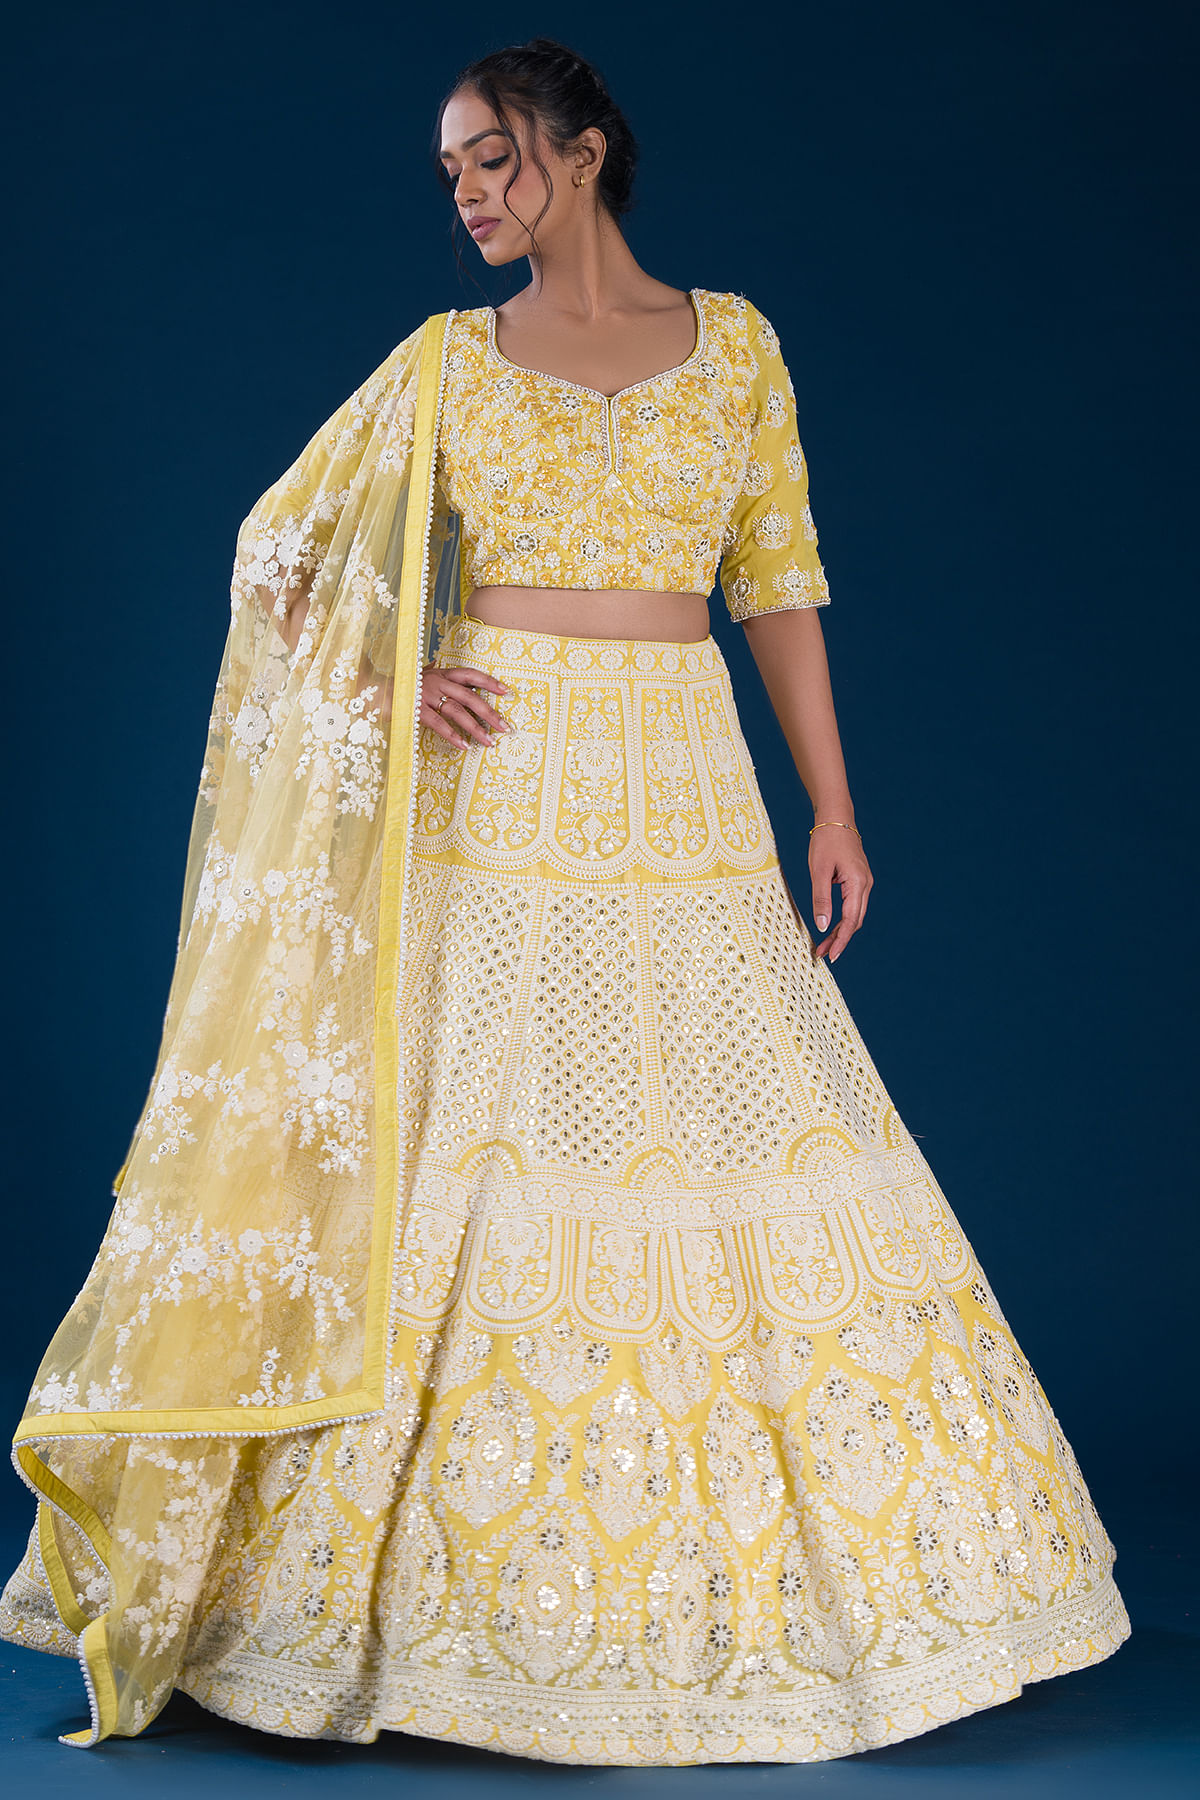 Explore Trendy Lehenga Designs and Make Them Yours - Samyakk: Sarees, Sherwani, Salwar Suits, Kurti, Lehenga, Gowns